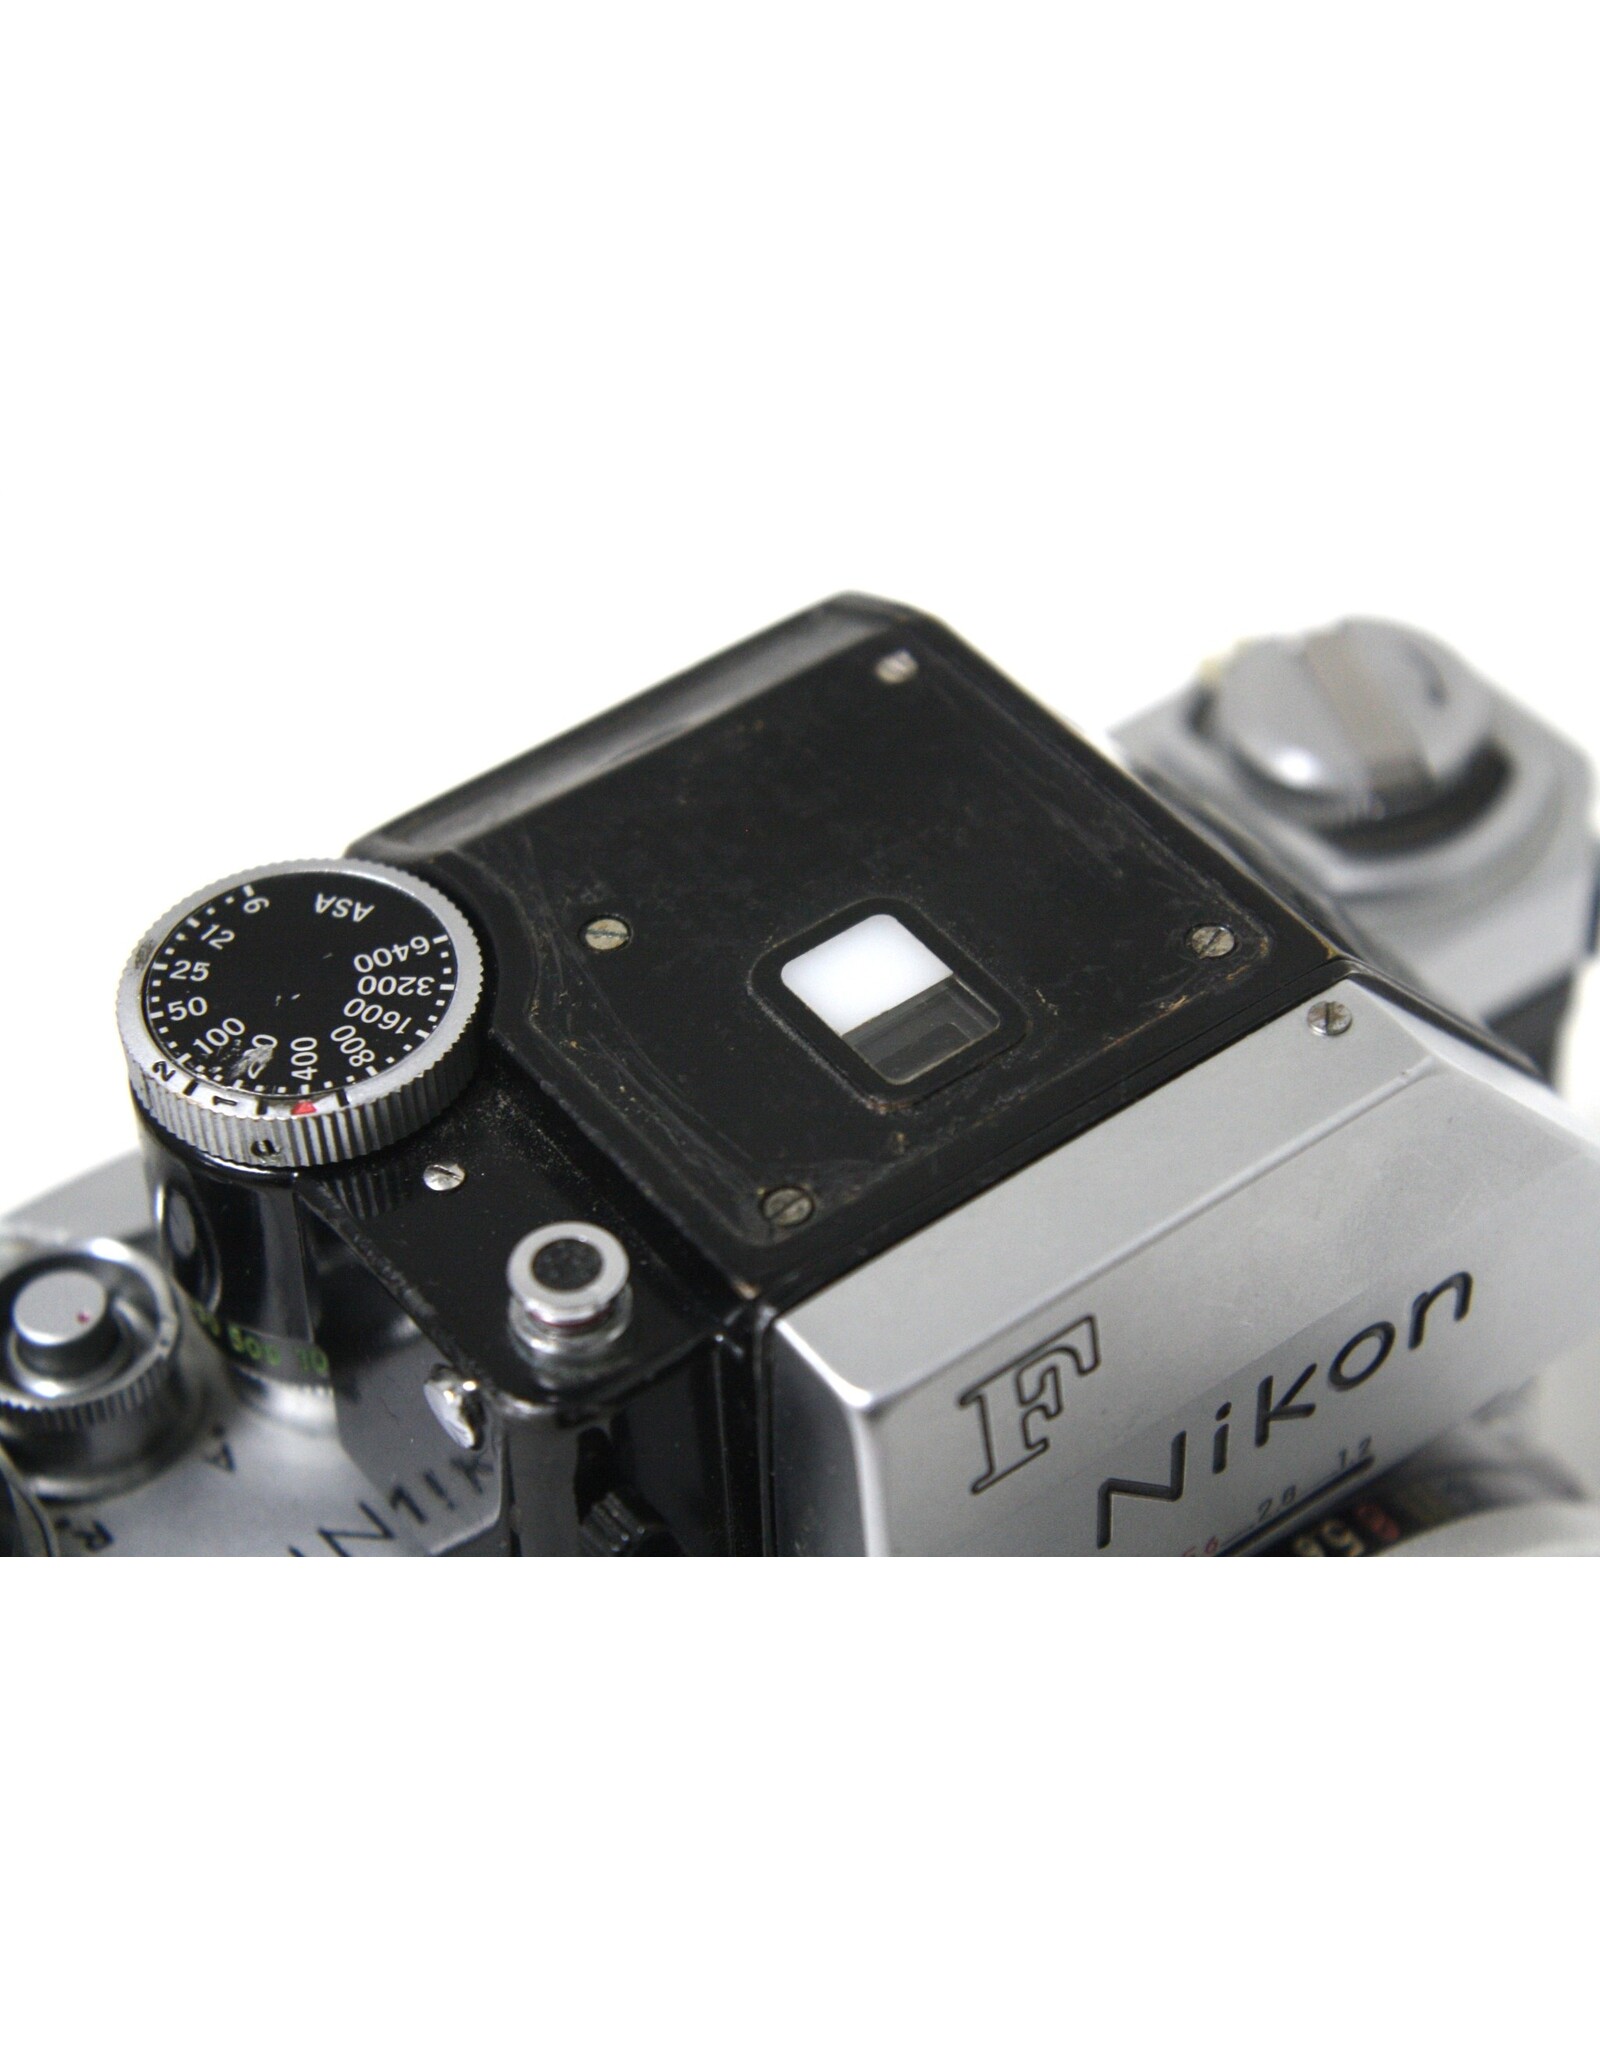 Nikon Nikon F Photomic FTn (#005) Film Camera w/ 50mm 1.4  Lens  (Pre-Owned)